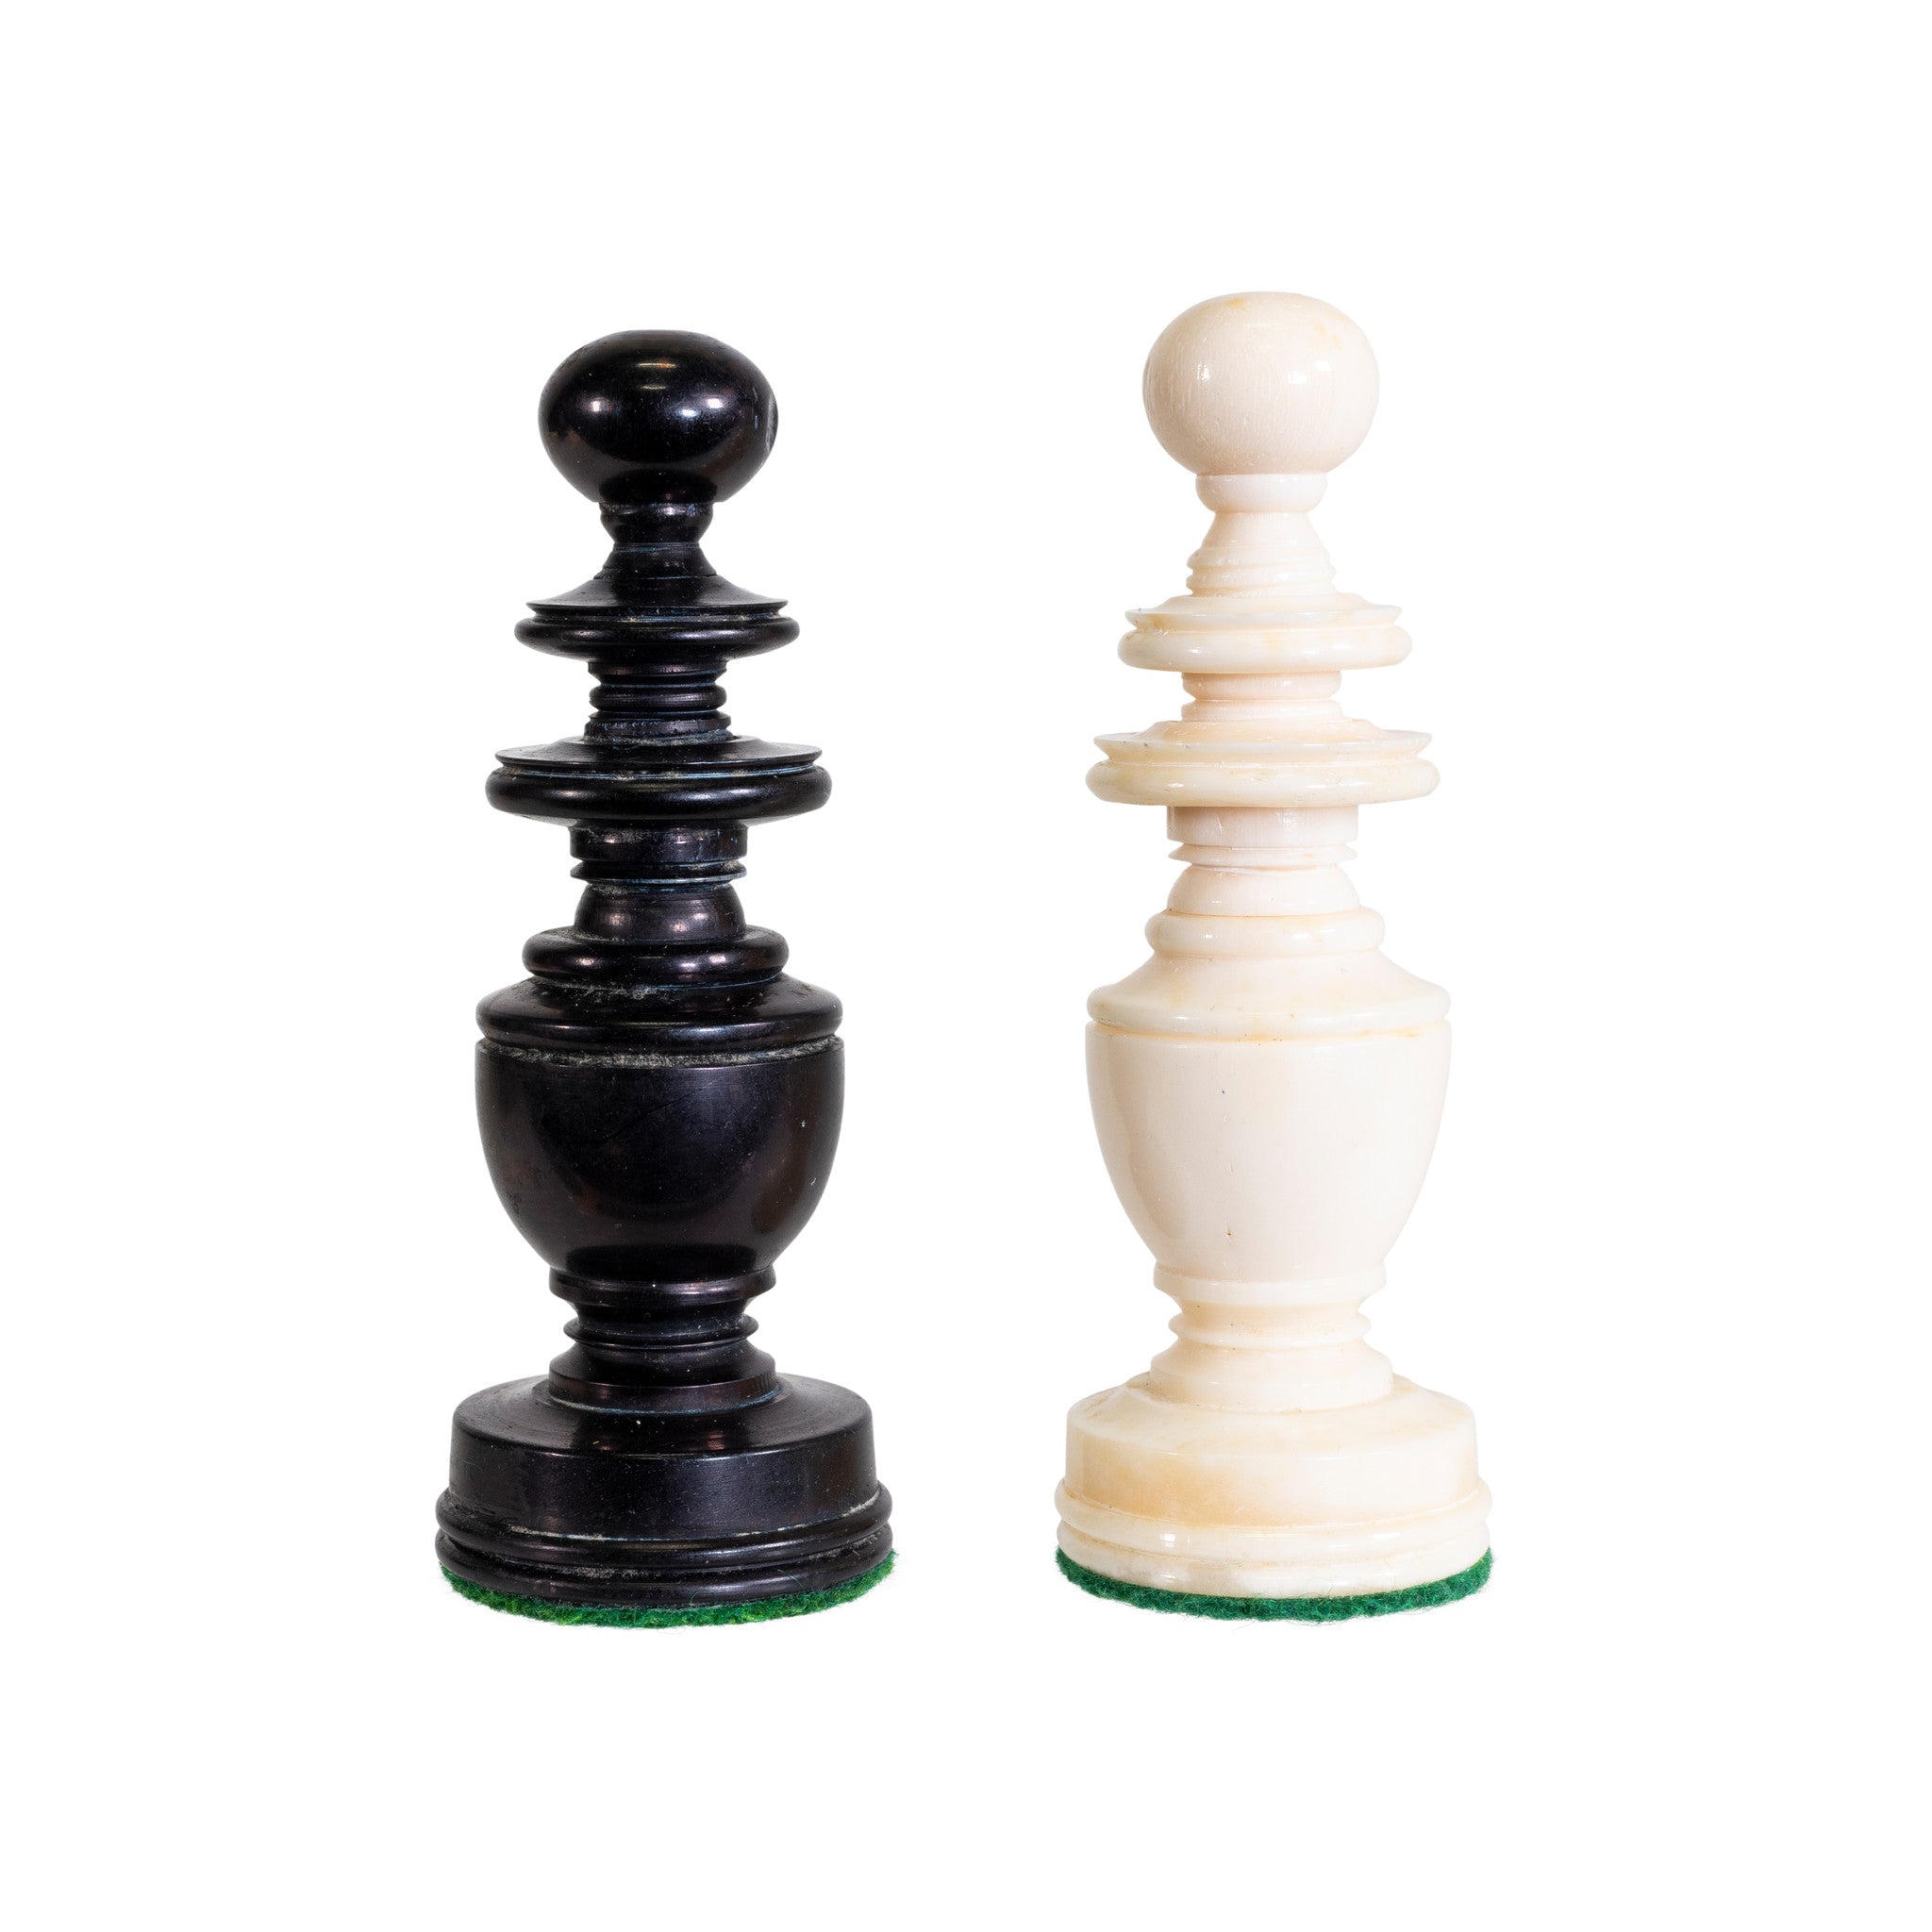 French "Regency" Design Chess Set